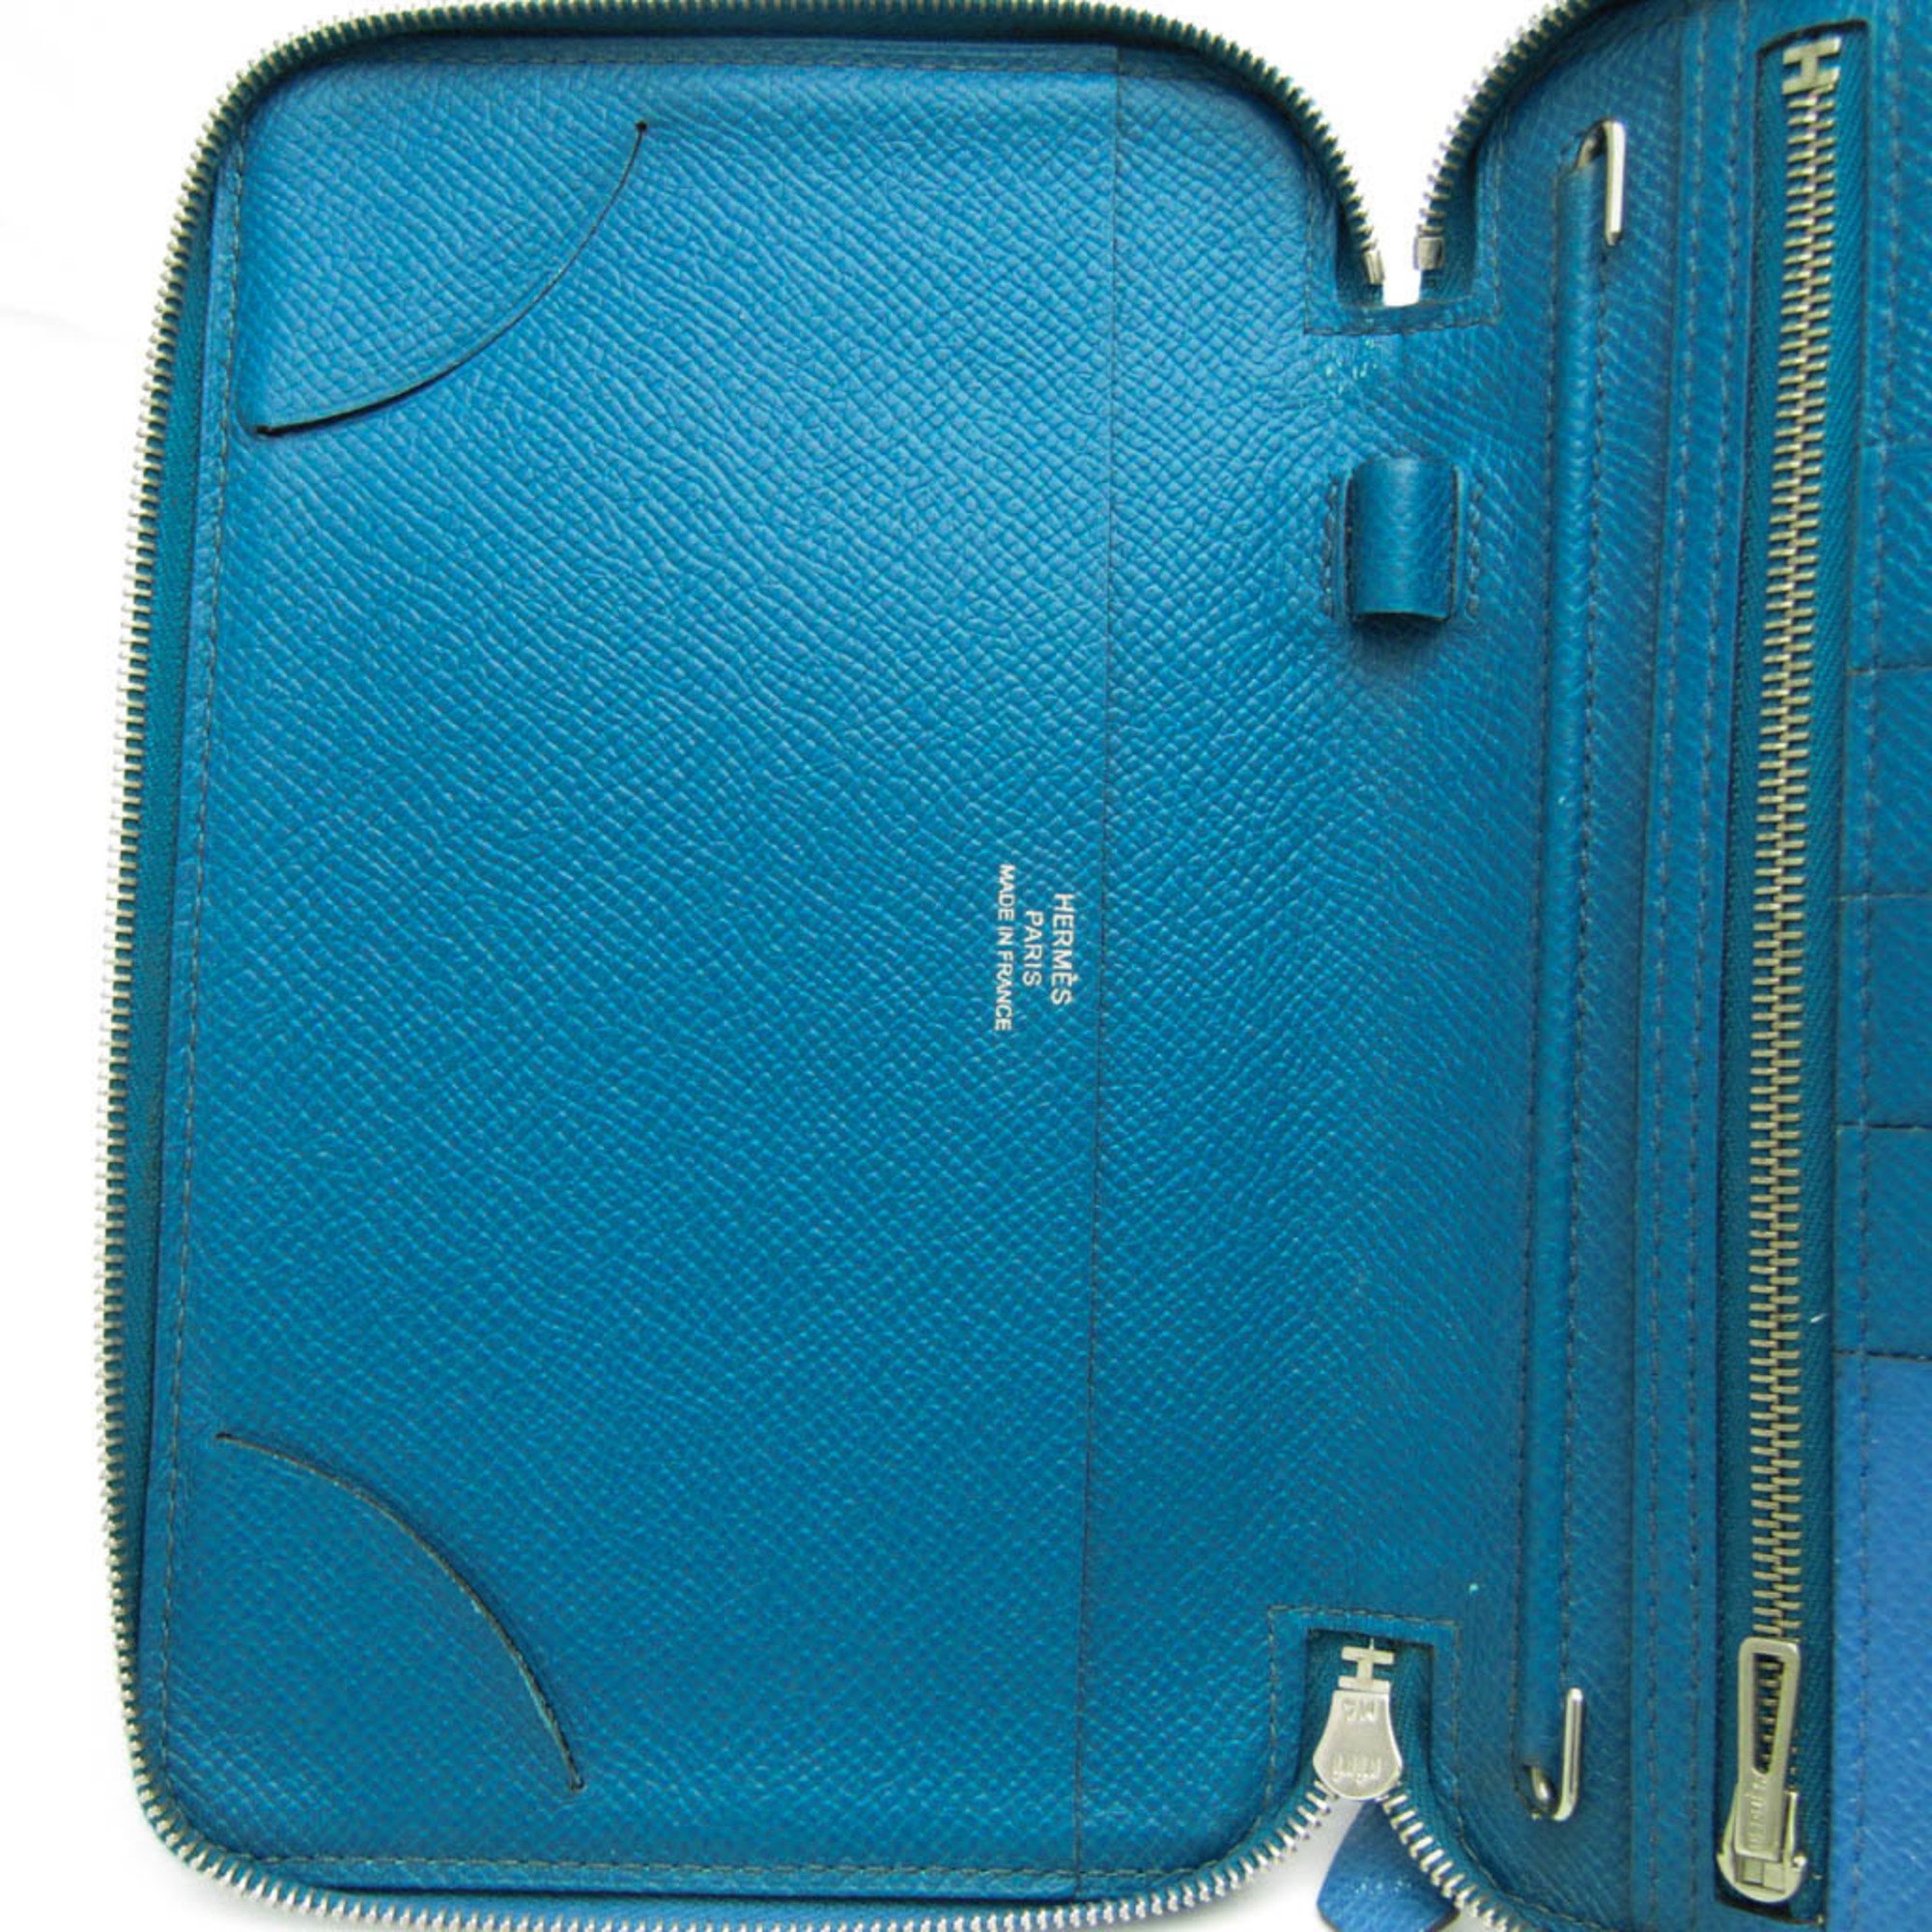 Hermes A5 Planner Cover Blue Agenda Zip Vision